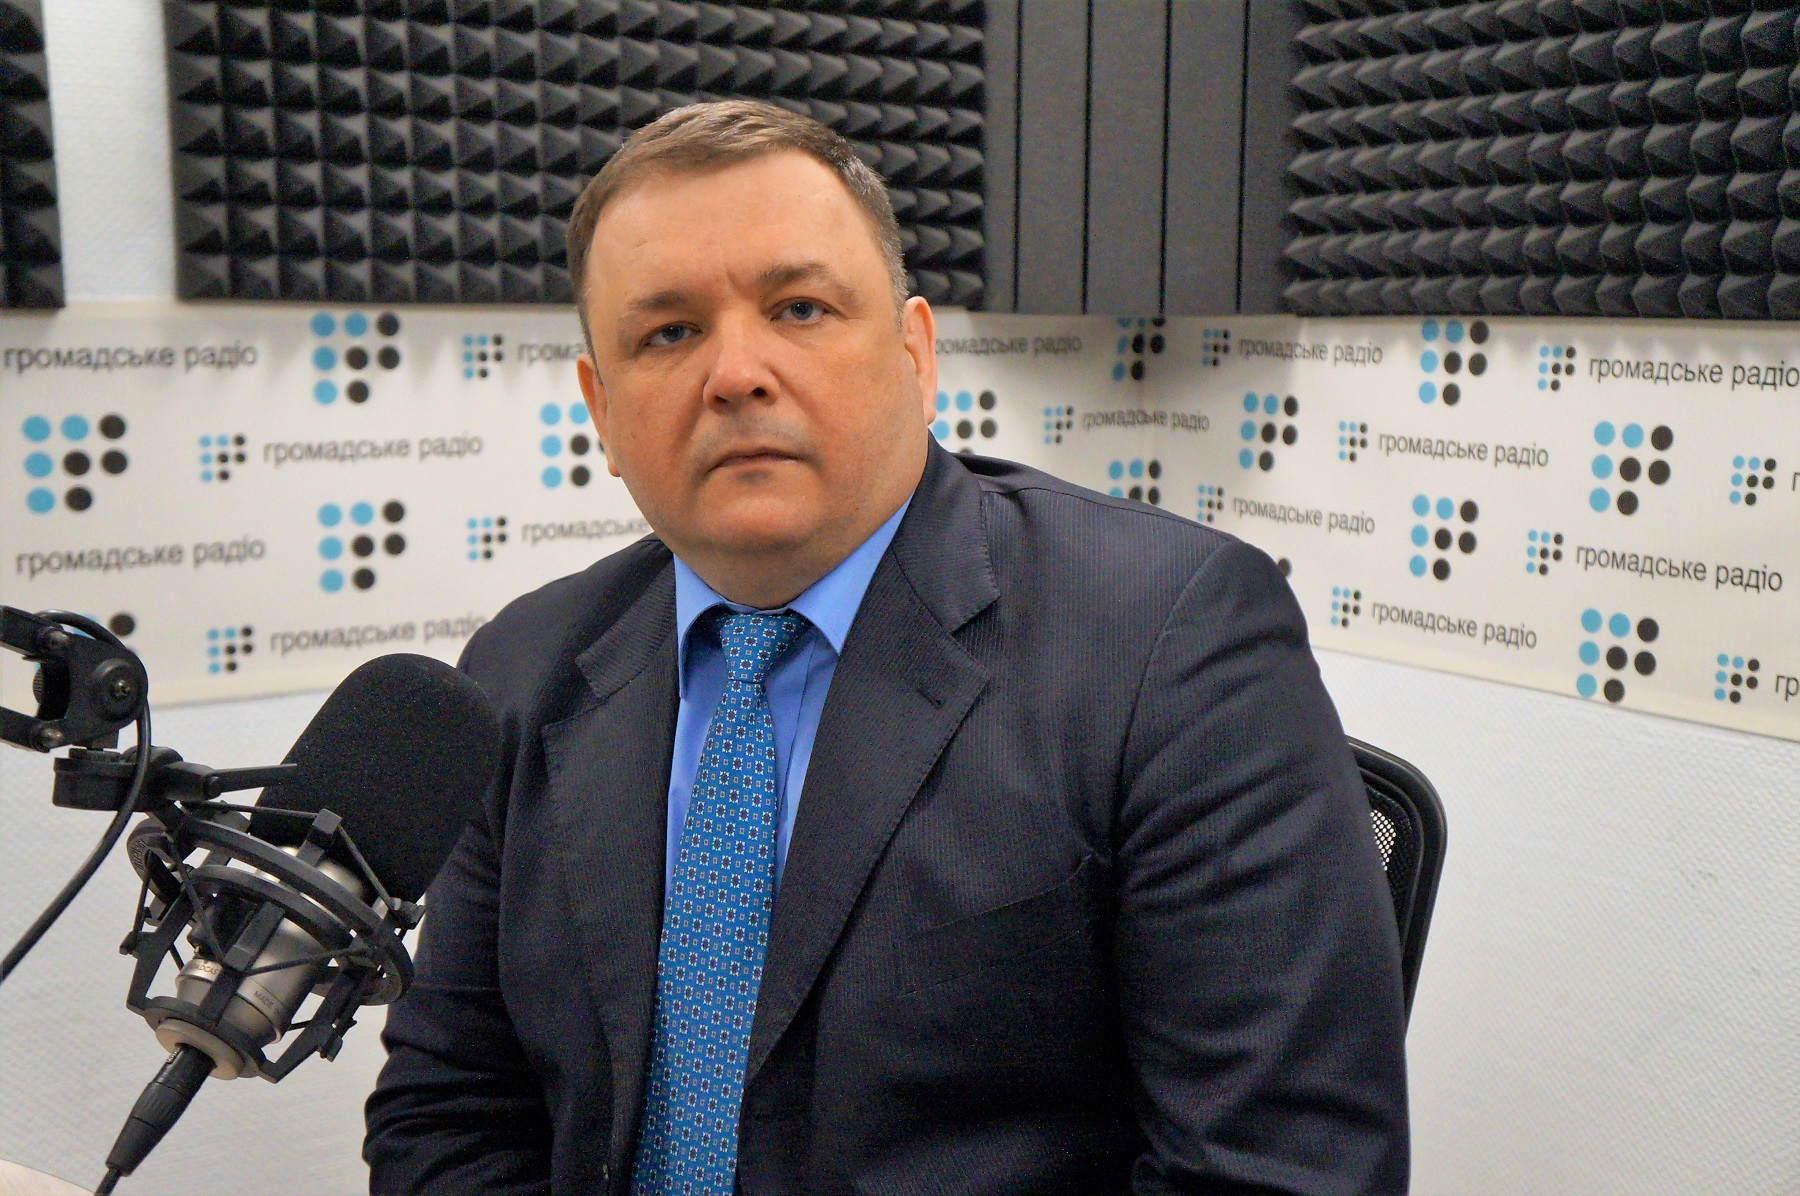 Ми судимо закони, що порушують права людини — голова КСУ Станіслав Шевчук